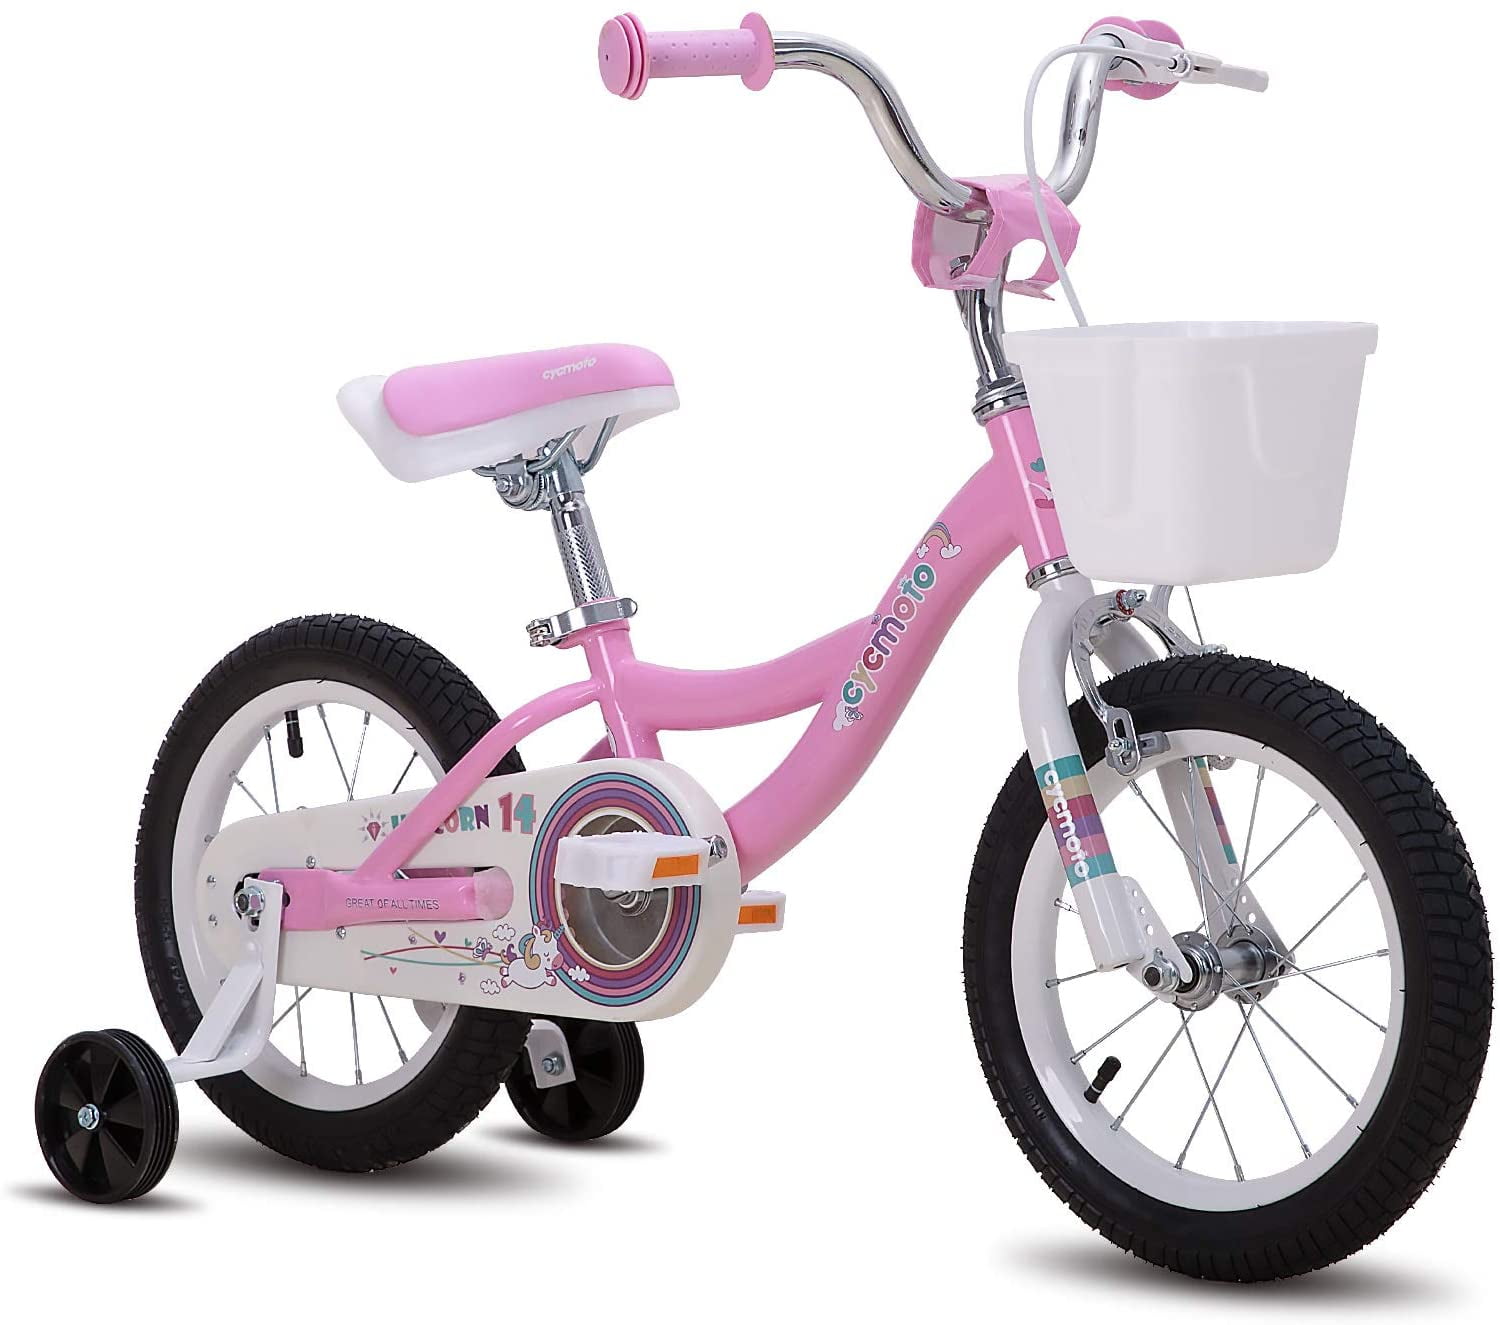 14 & 16 Kids Bicyle with Basket Hand Brake & Training Wheels Blue Pink Purple CYCMOTO Girls Bike for 3-6 Years Child 